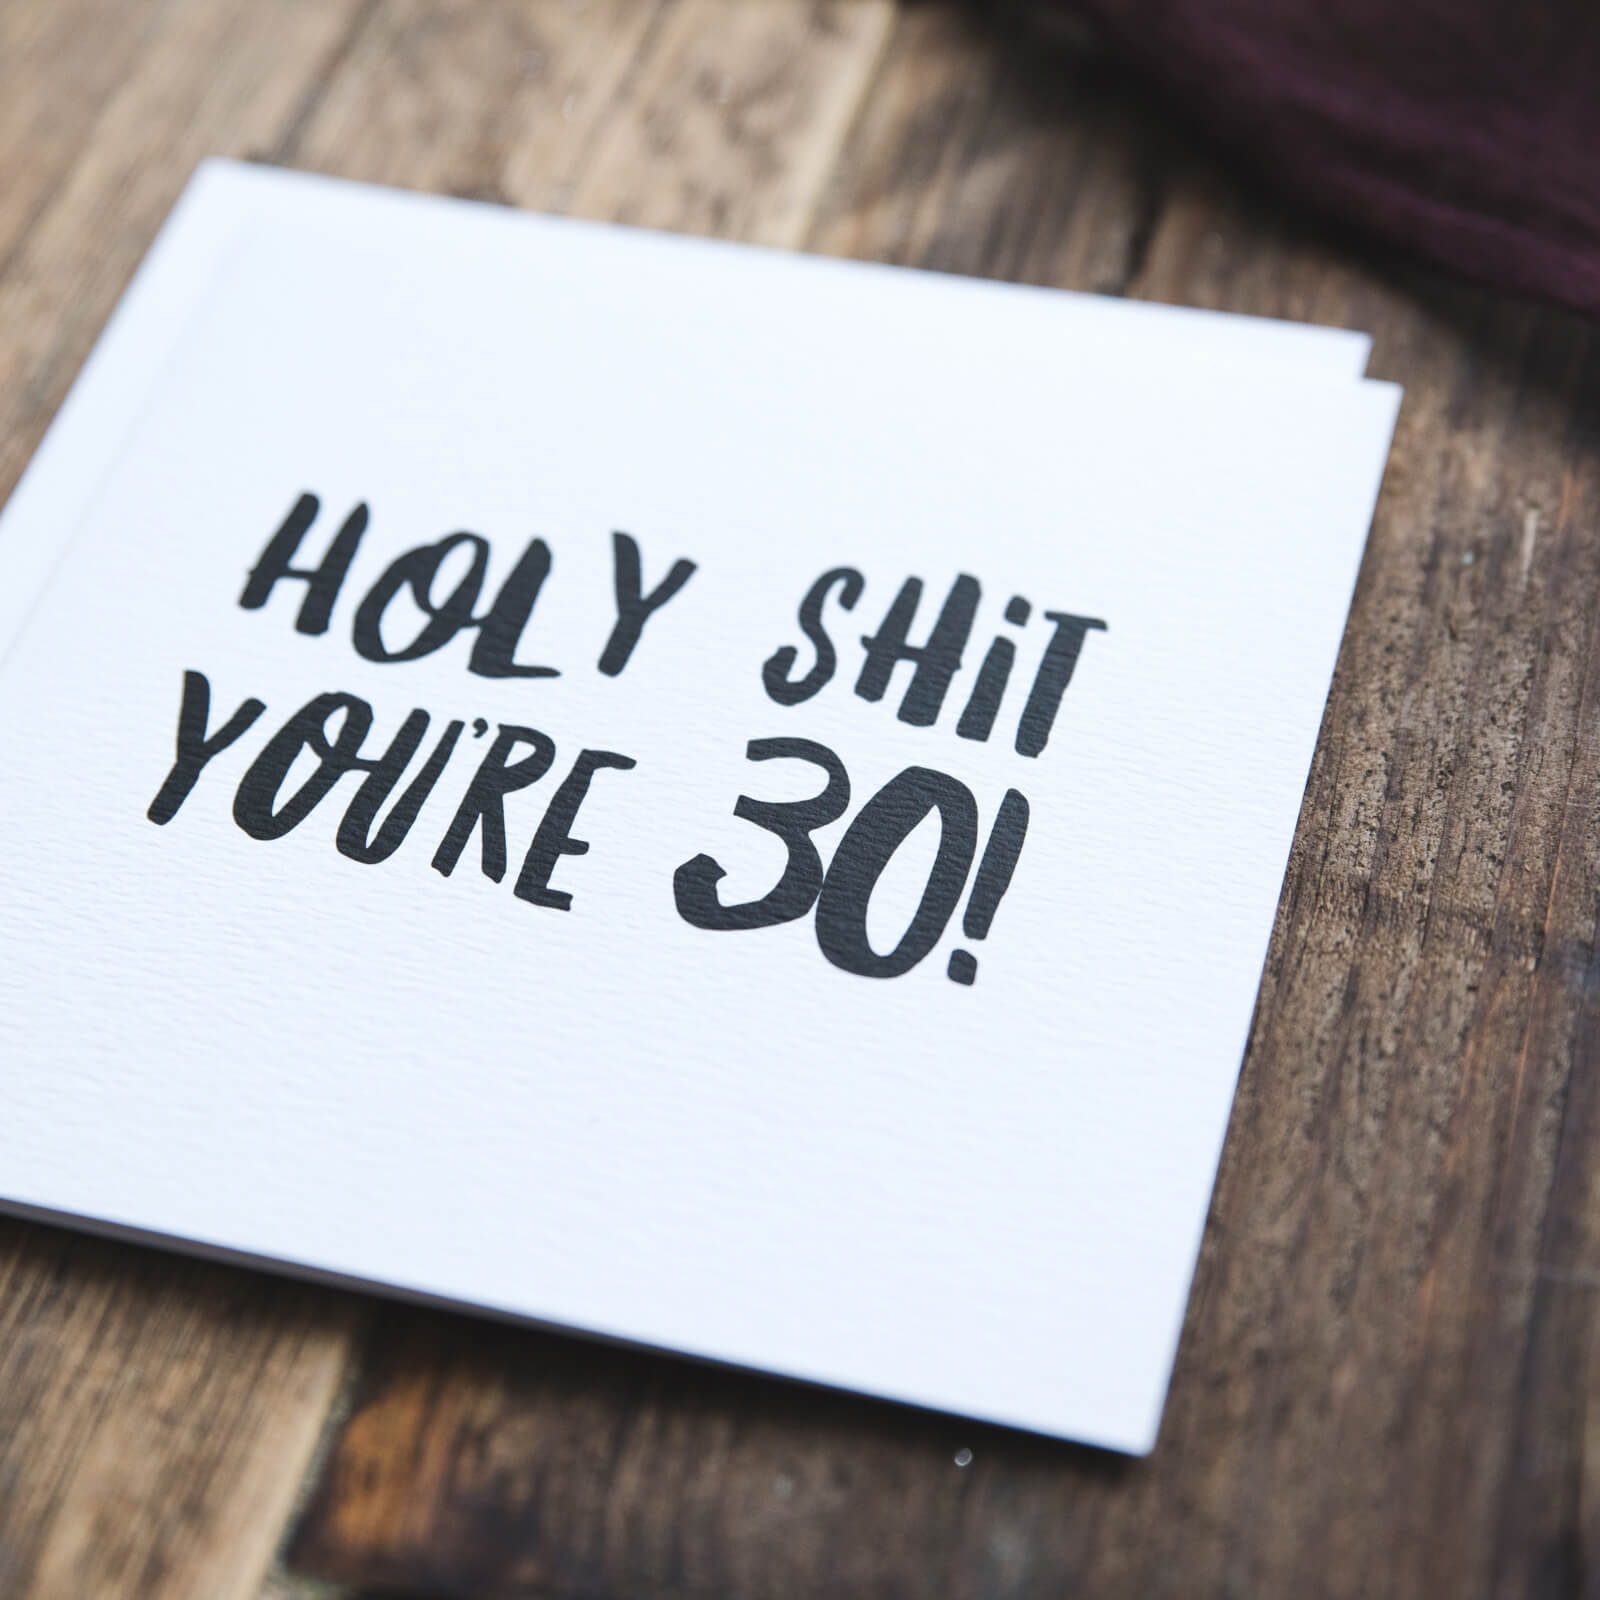 Holy Shit You&#39;re 30! Funny Milestone Birthday Card - I am Nat Ltd - Greeting Card